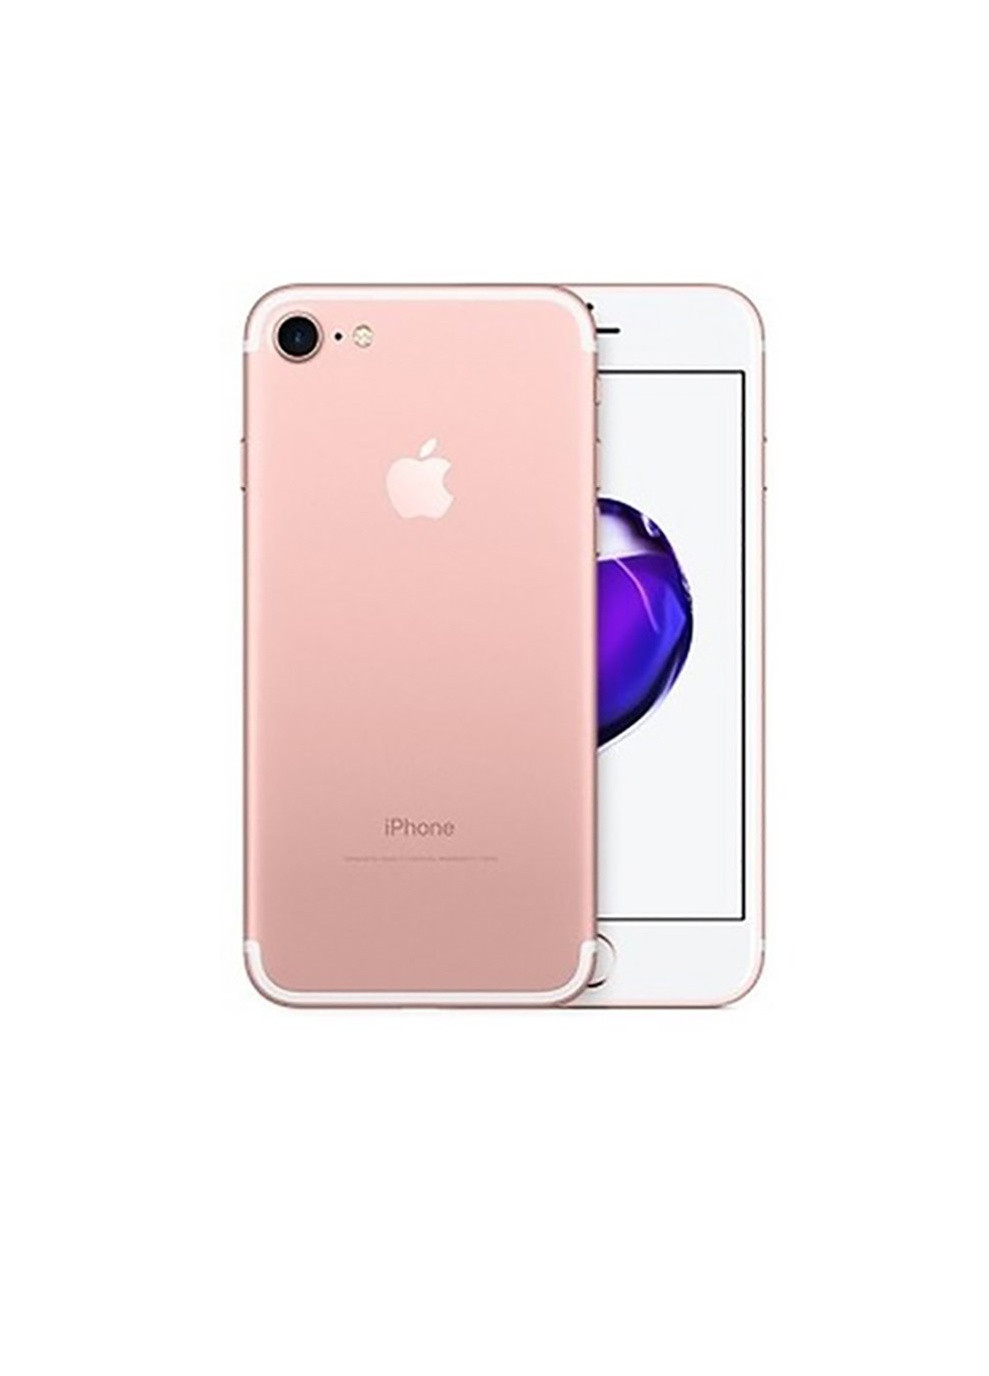 iPhone 7 128Gb (Rose Gold) (MN952) Apple (242115870)